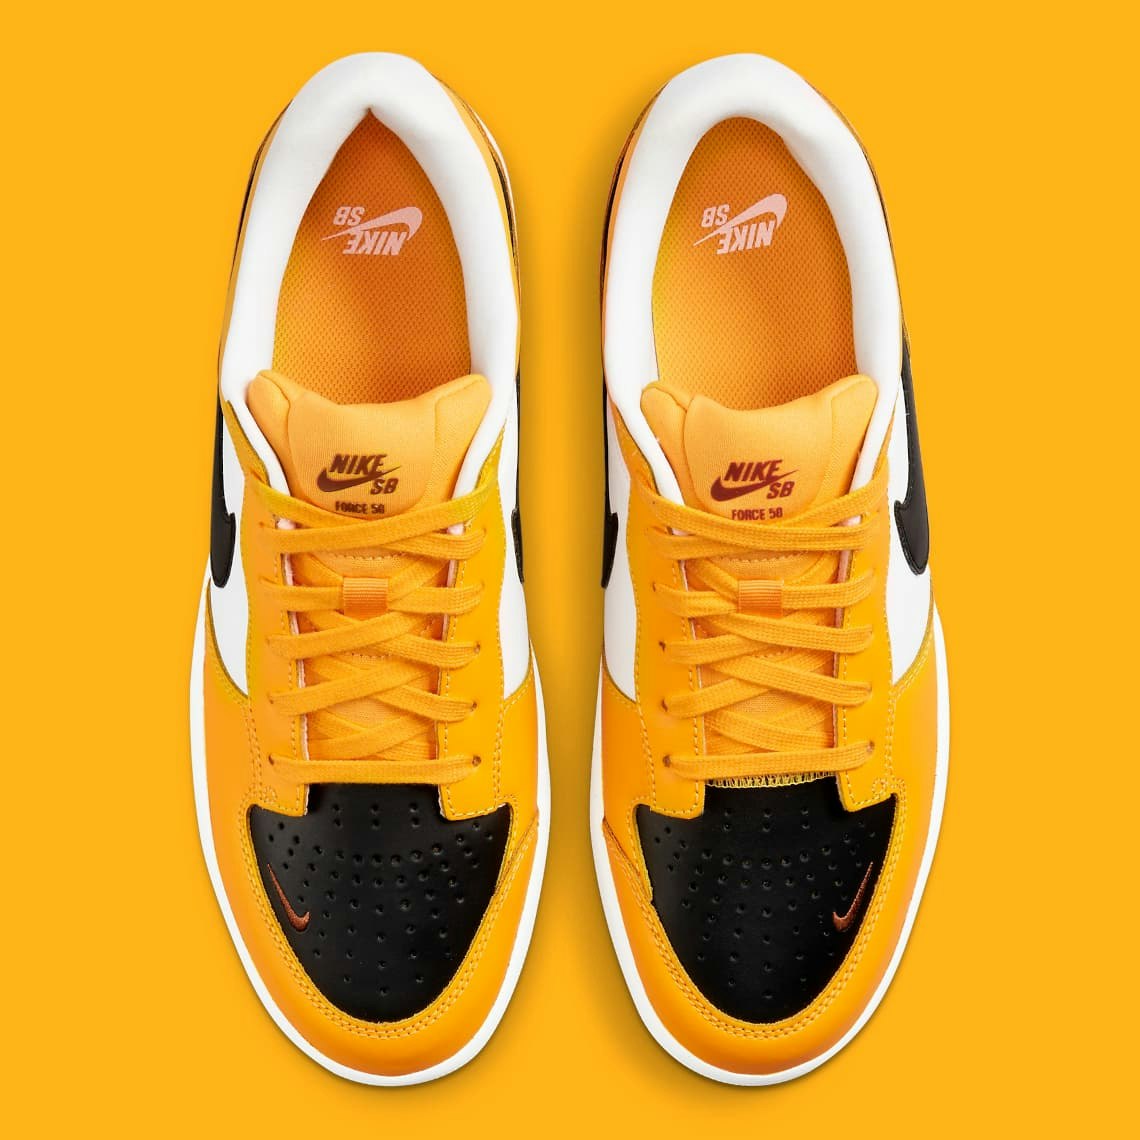 Nike SB Force 58 "Laser Orange"